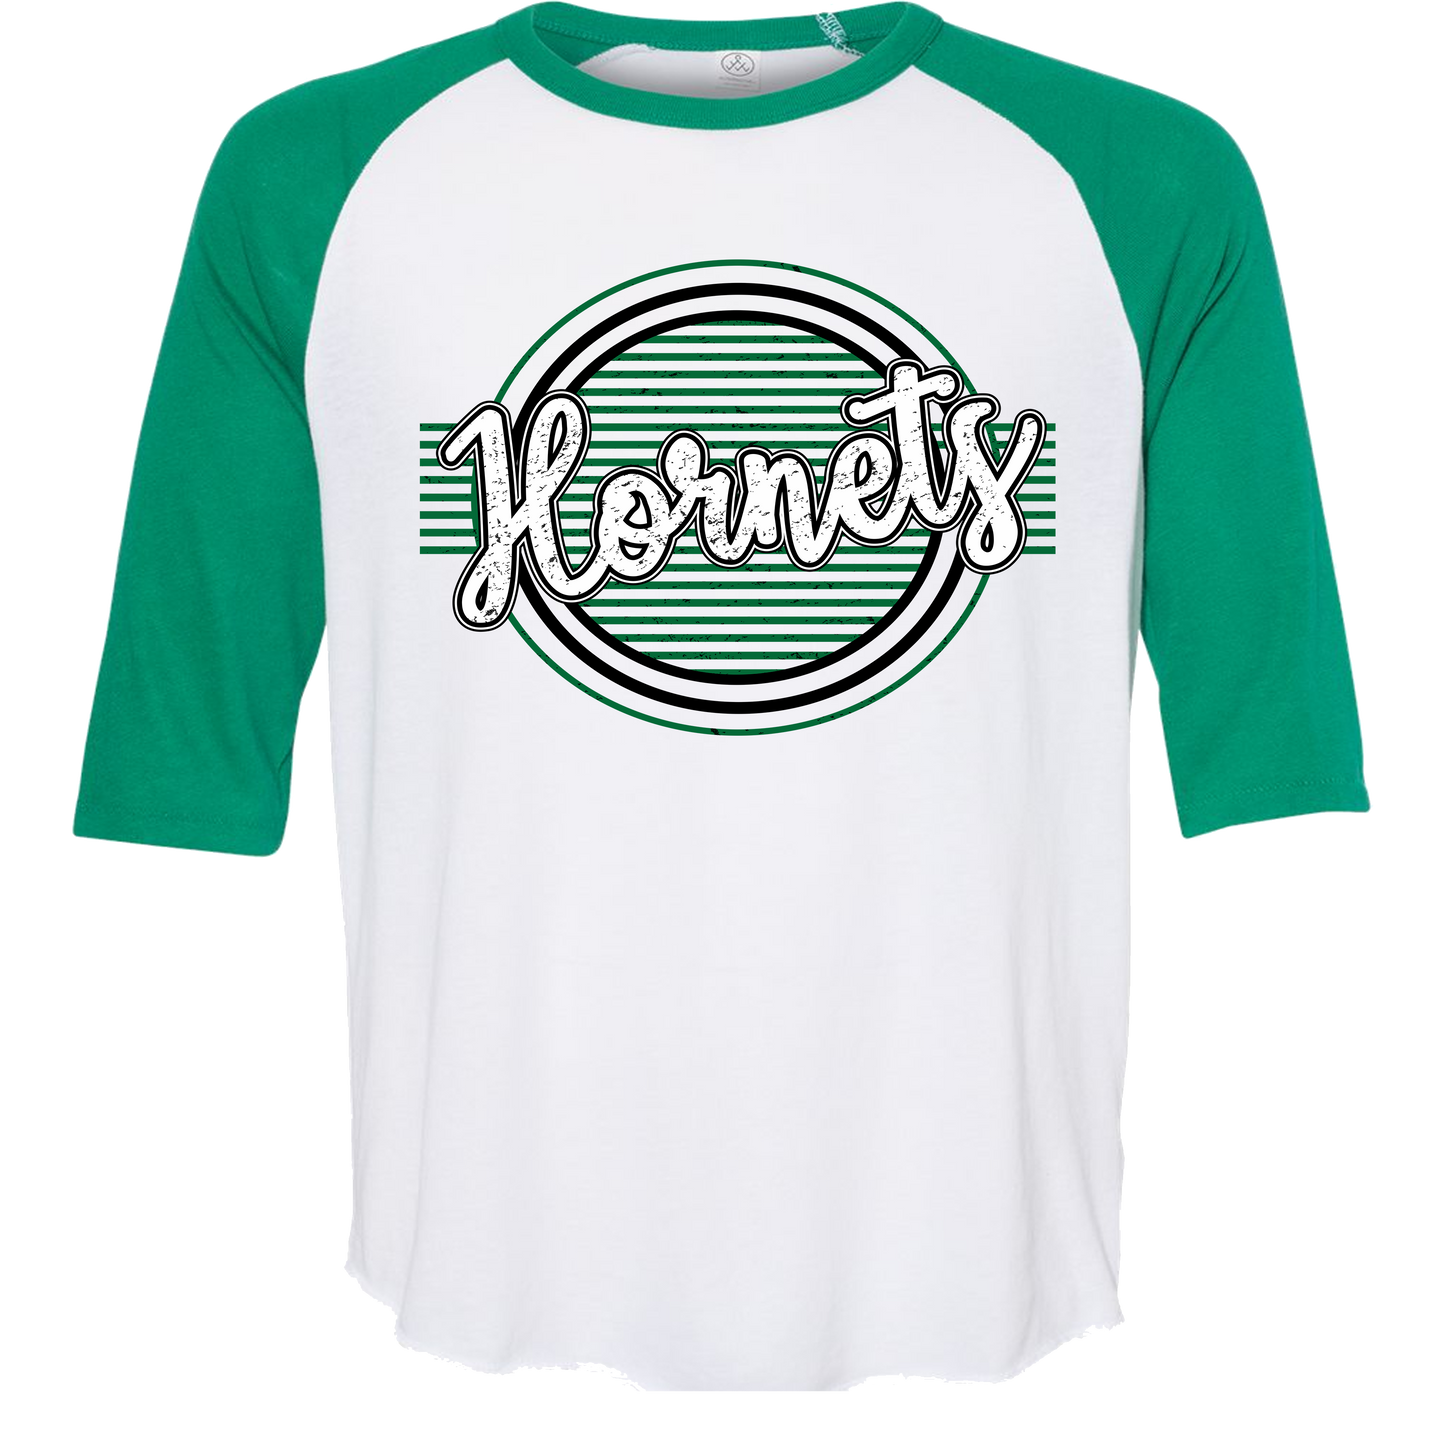 Hornets Green Raglan T-shirts